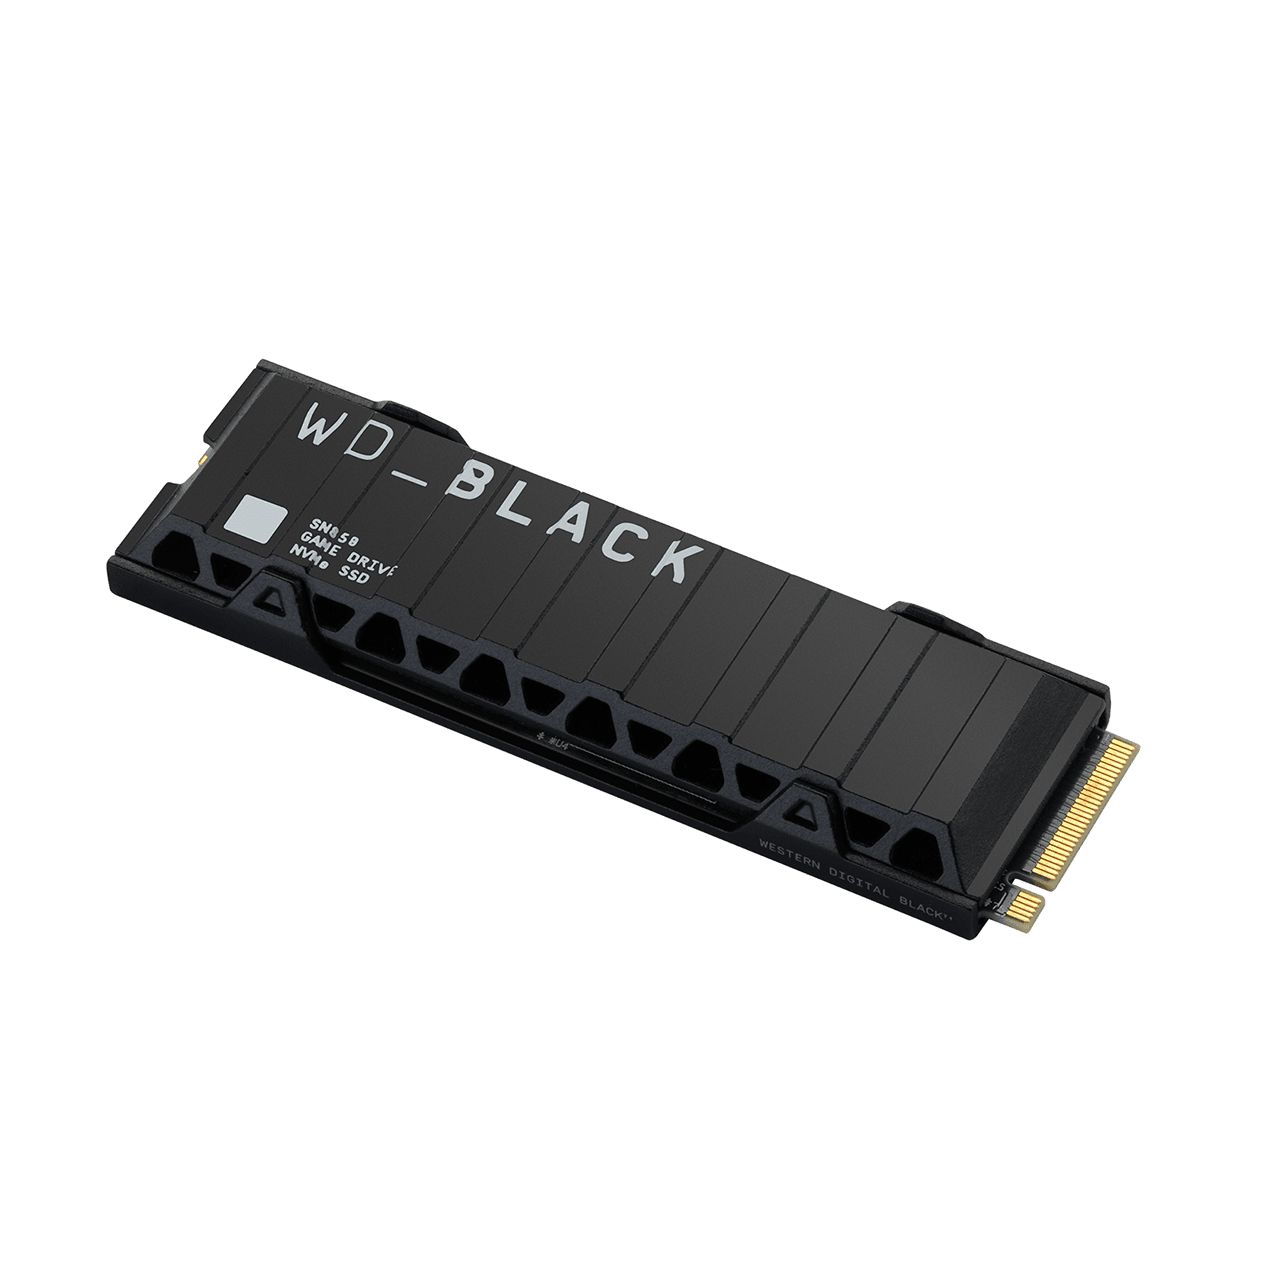 WDS100T1XHE - SSSD WD Black SN850 1Tb NVMe M.2 PCIE GEN4 (WDS100T1XHE)